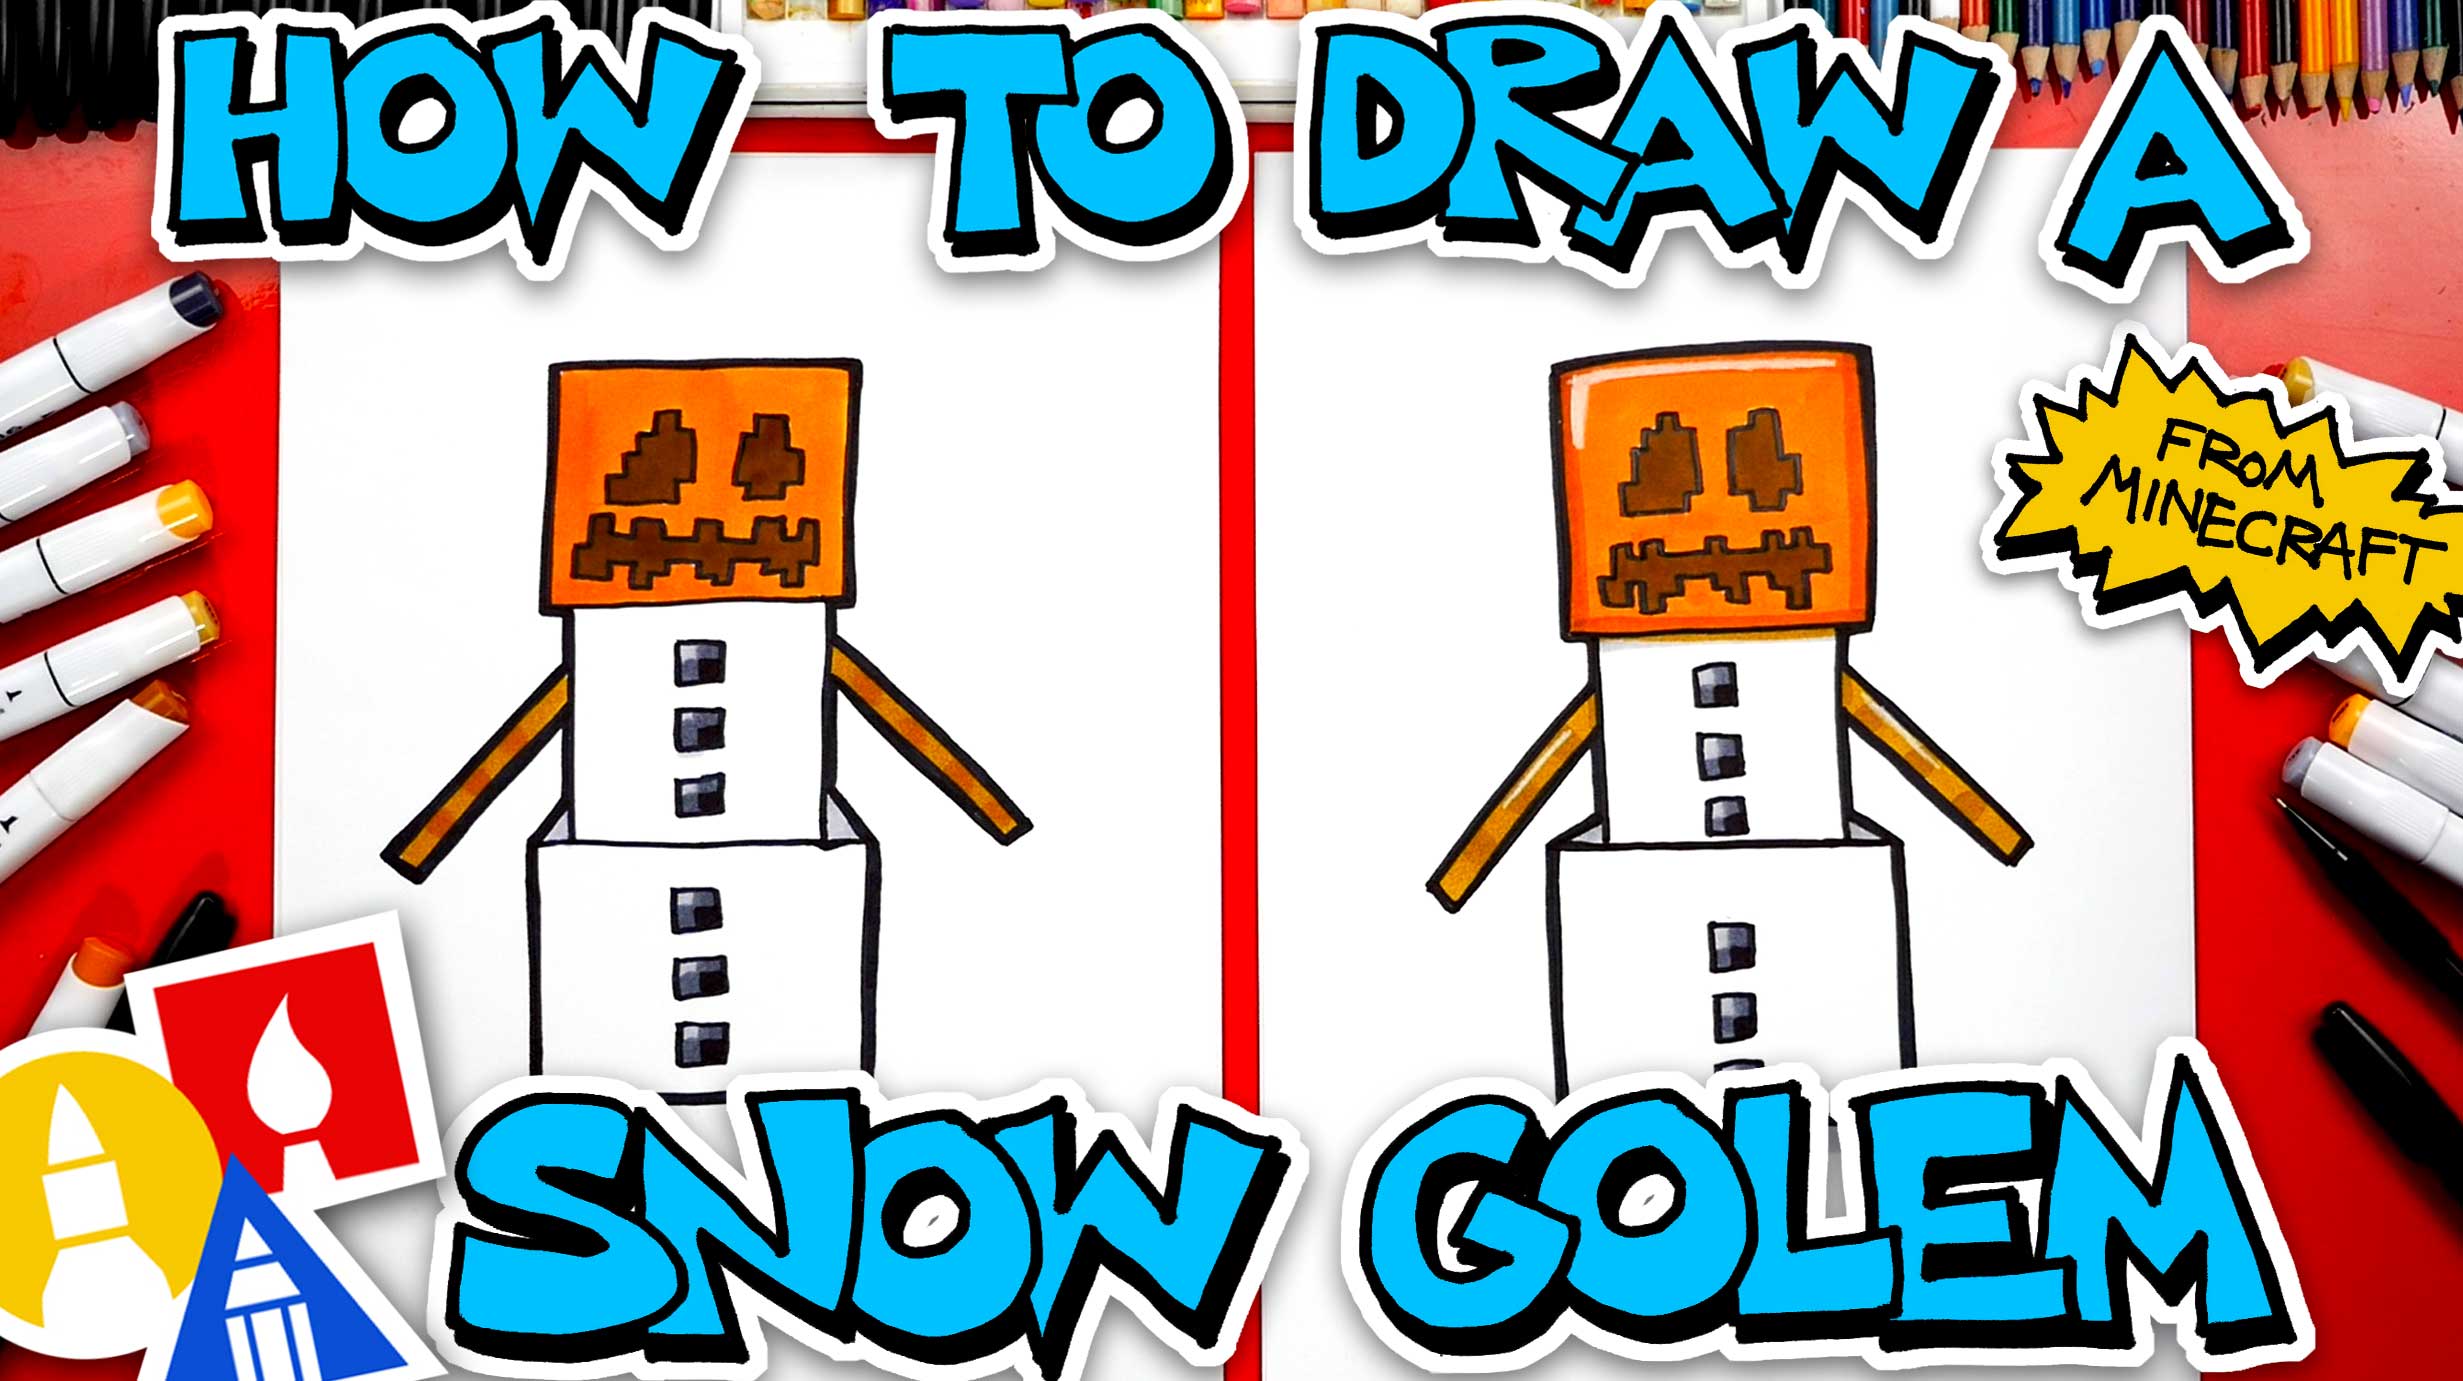 https://artforkidshub.com/wp-content/uploads/2021/04/How-To-Draw-A-Snow-Golem-From-Minecraft-thumbnail.jpg